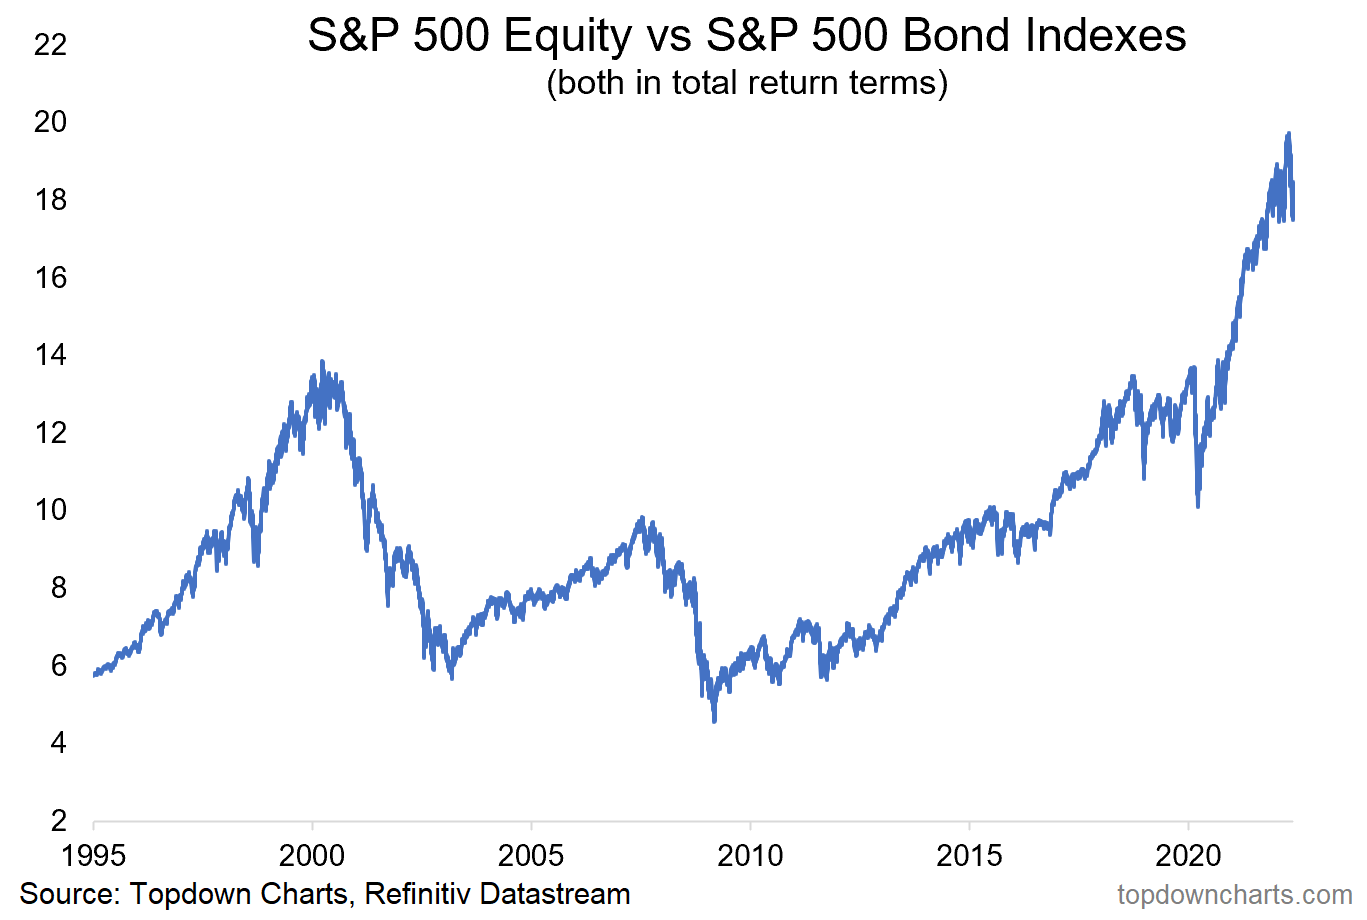 S&P 500 Equity vs Bond Indexes